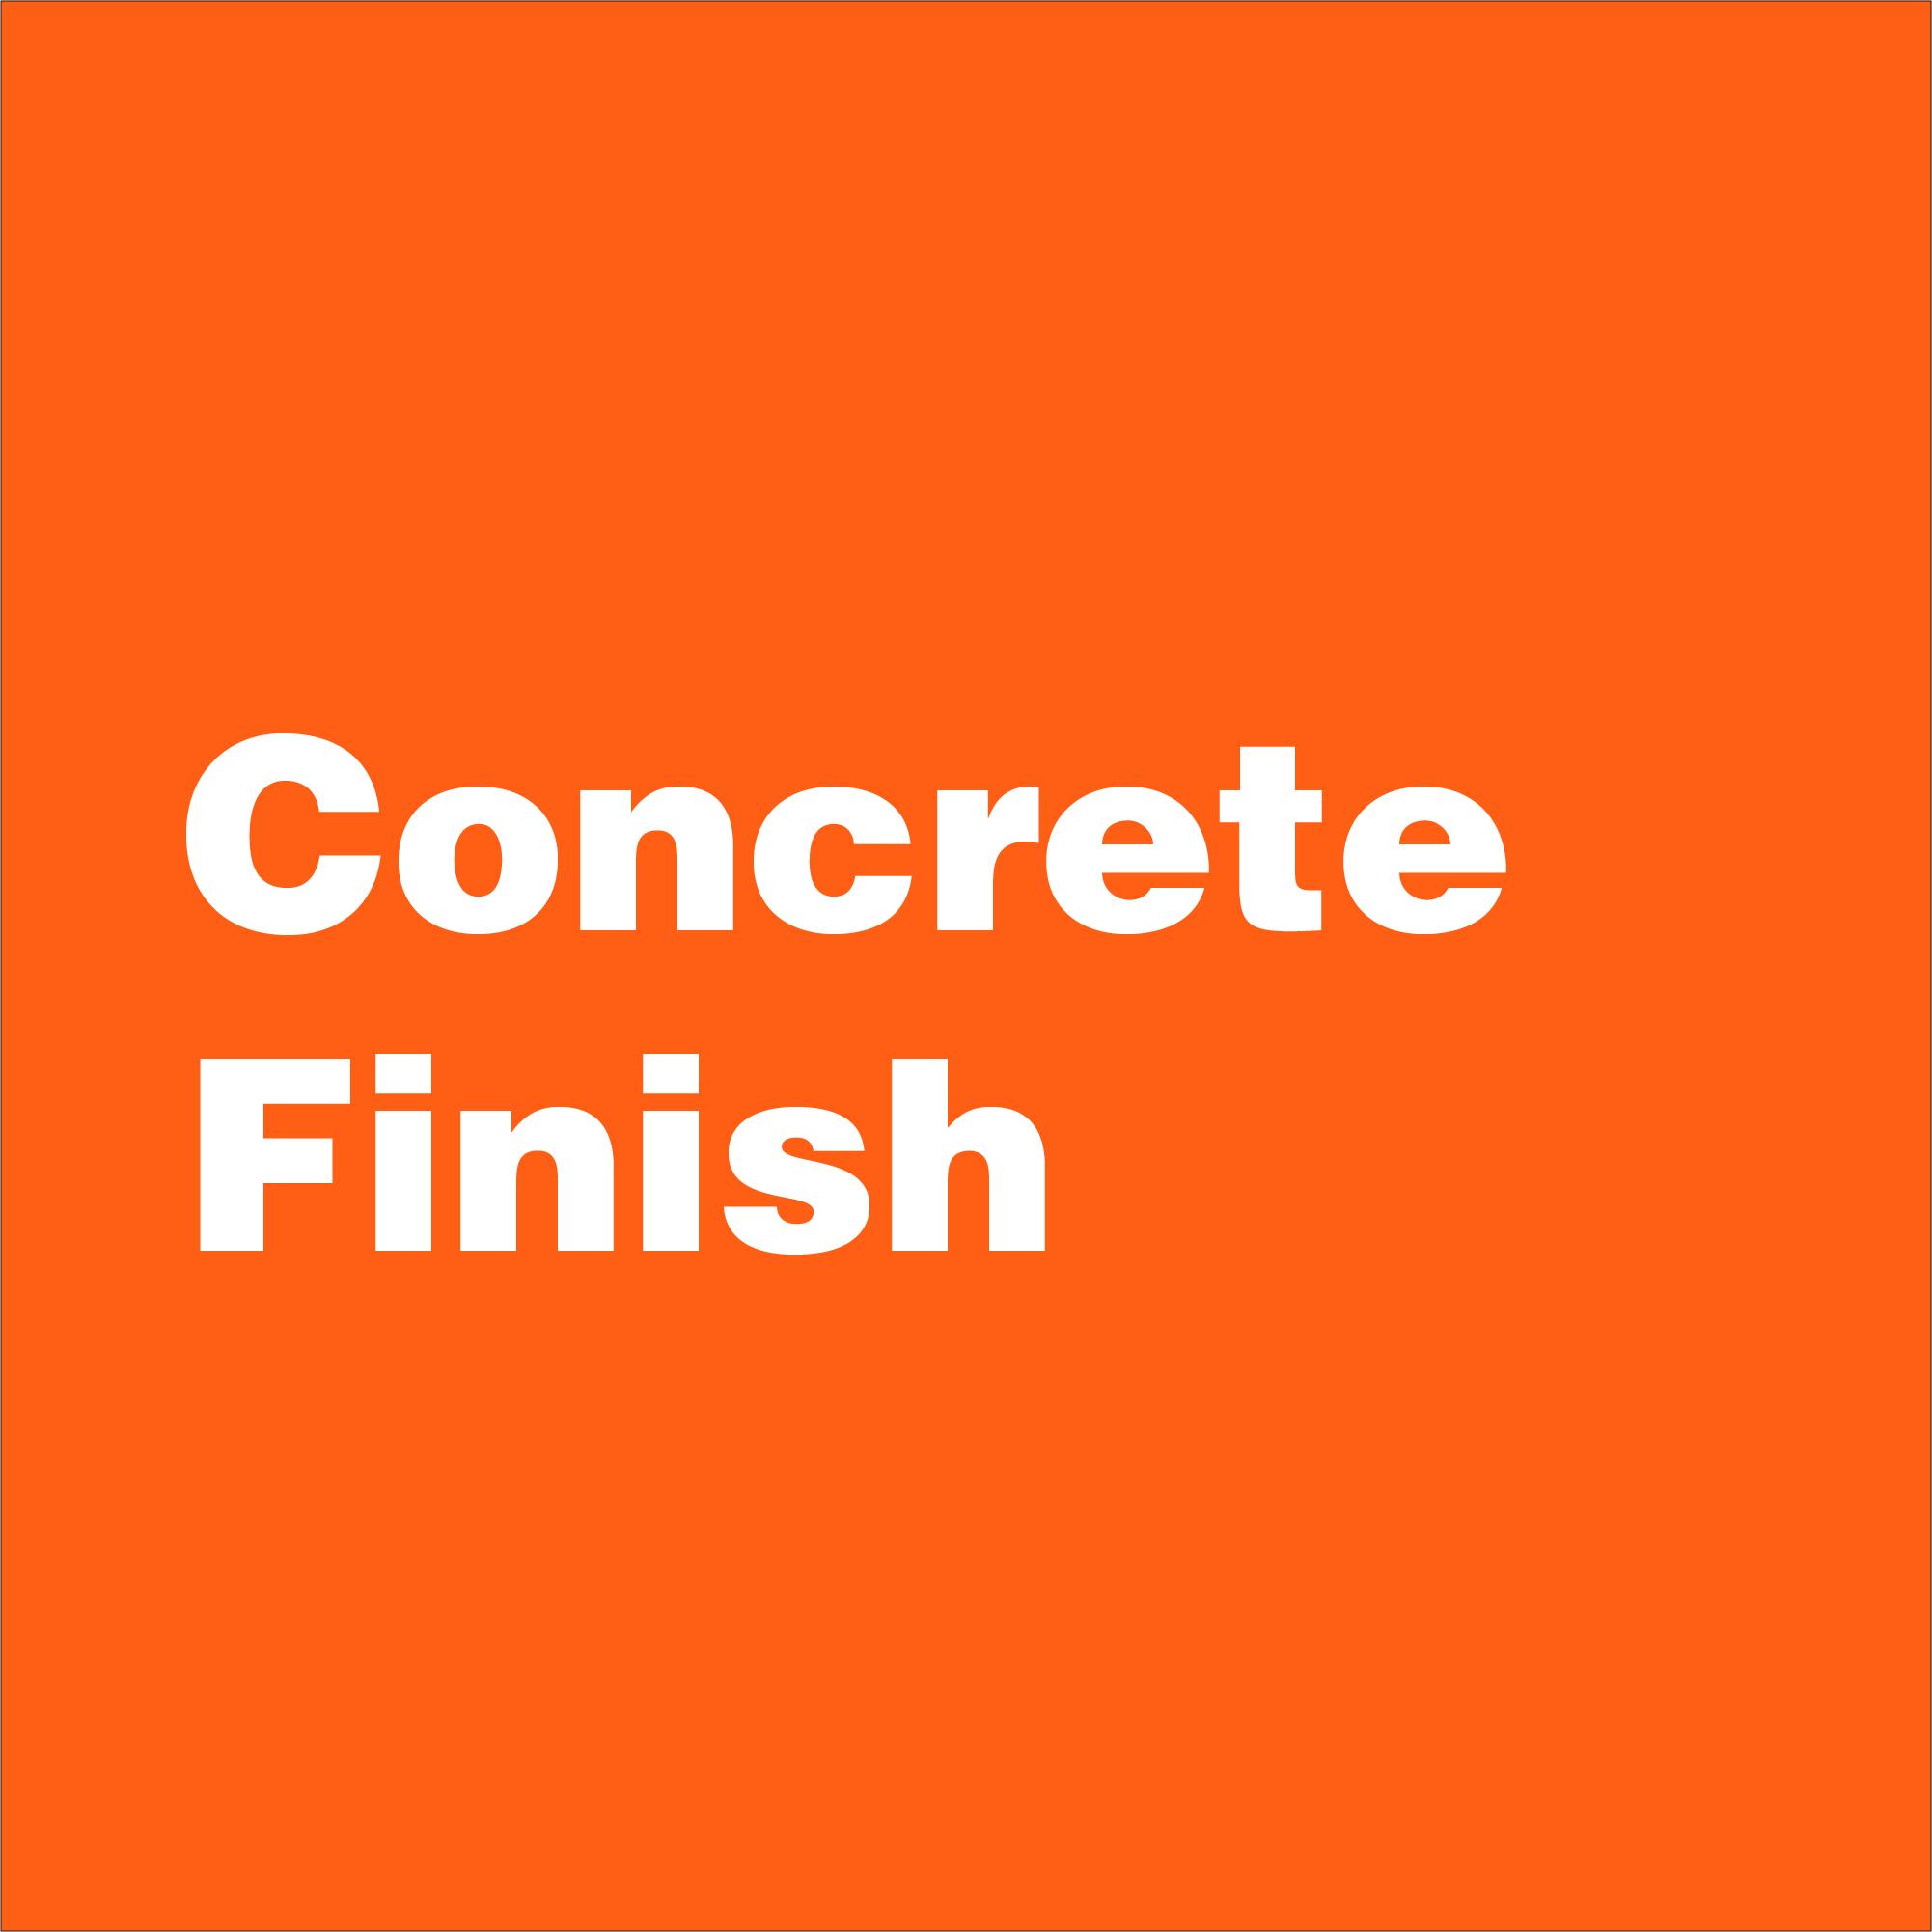 Concrete Finish2 image